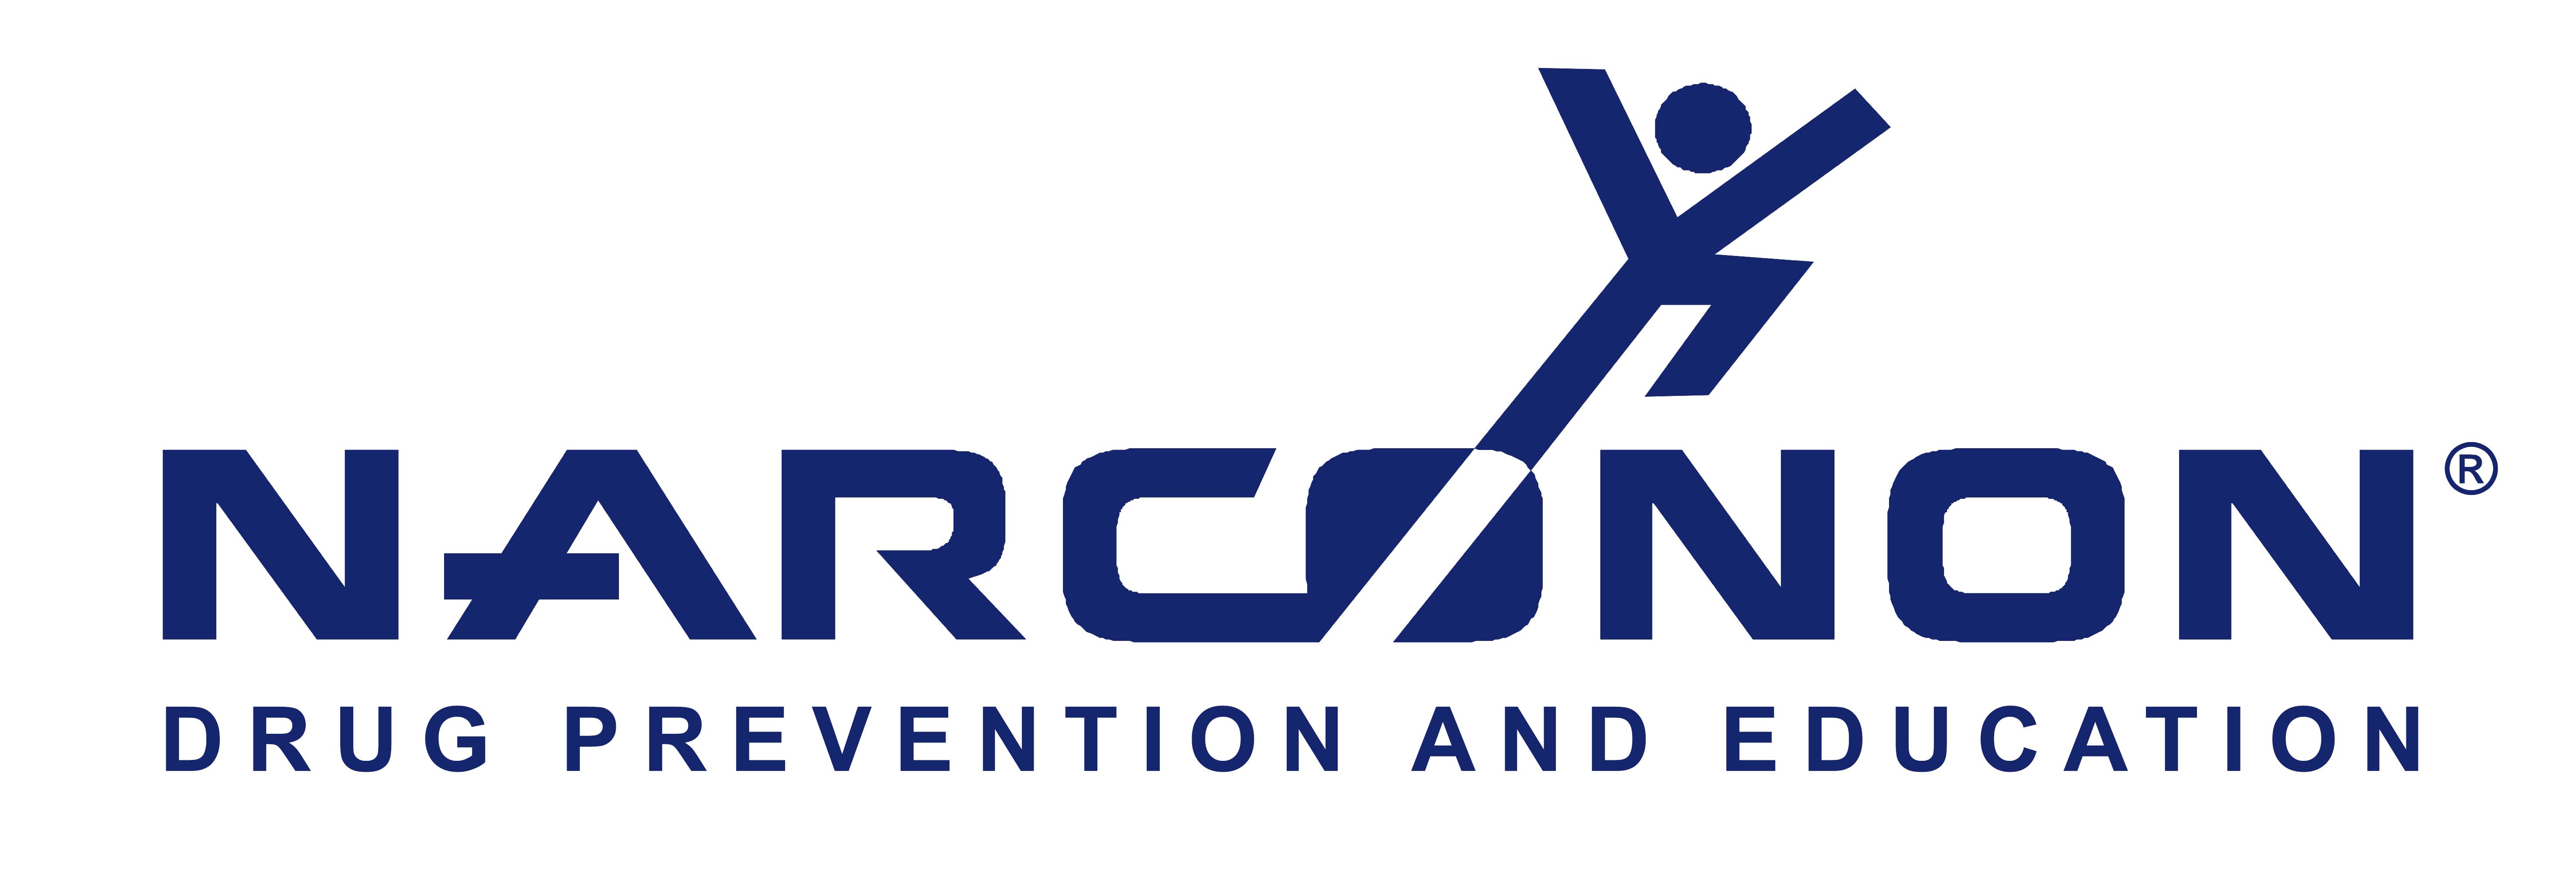 Narconon Drug Prevention and Education